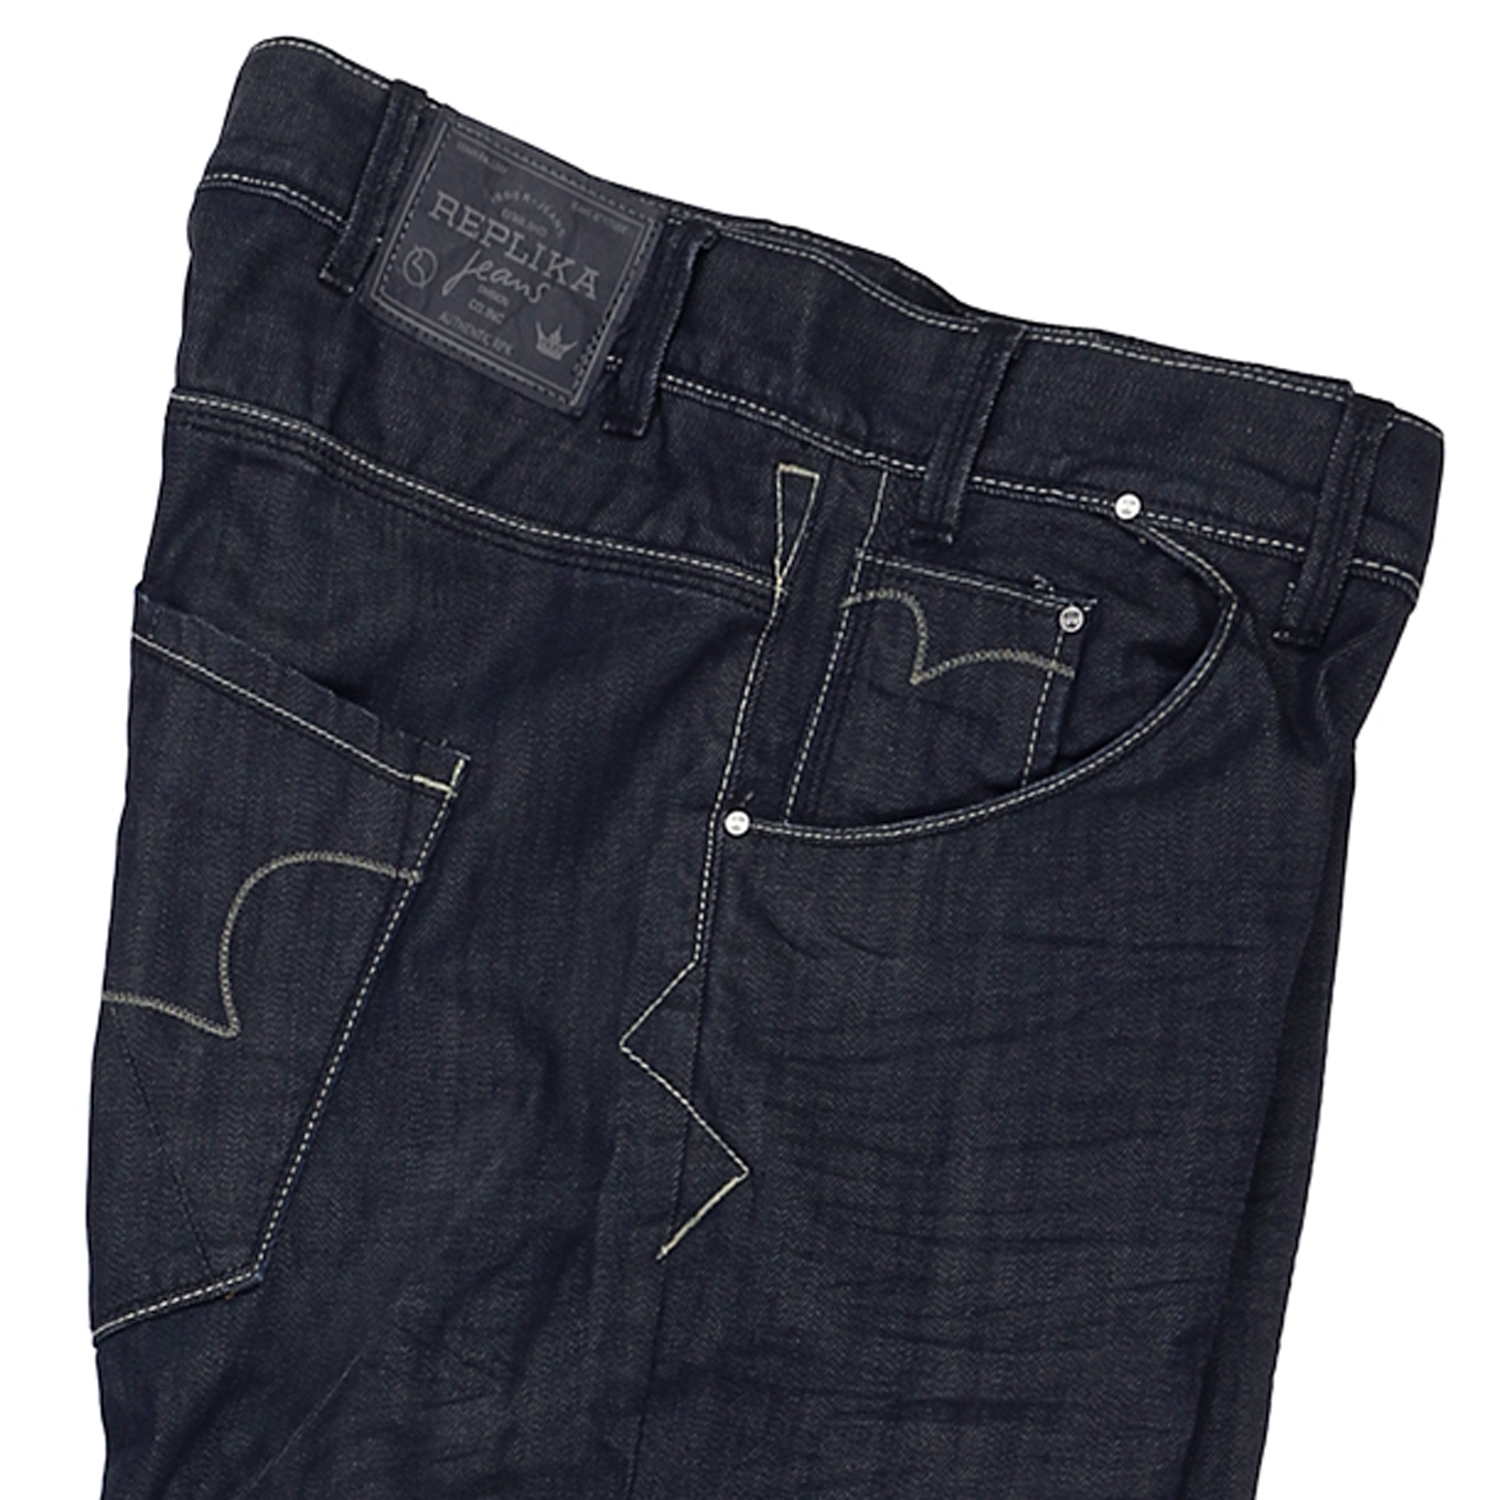 Dark blue jeans by Replika - large sizes